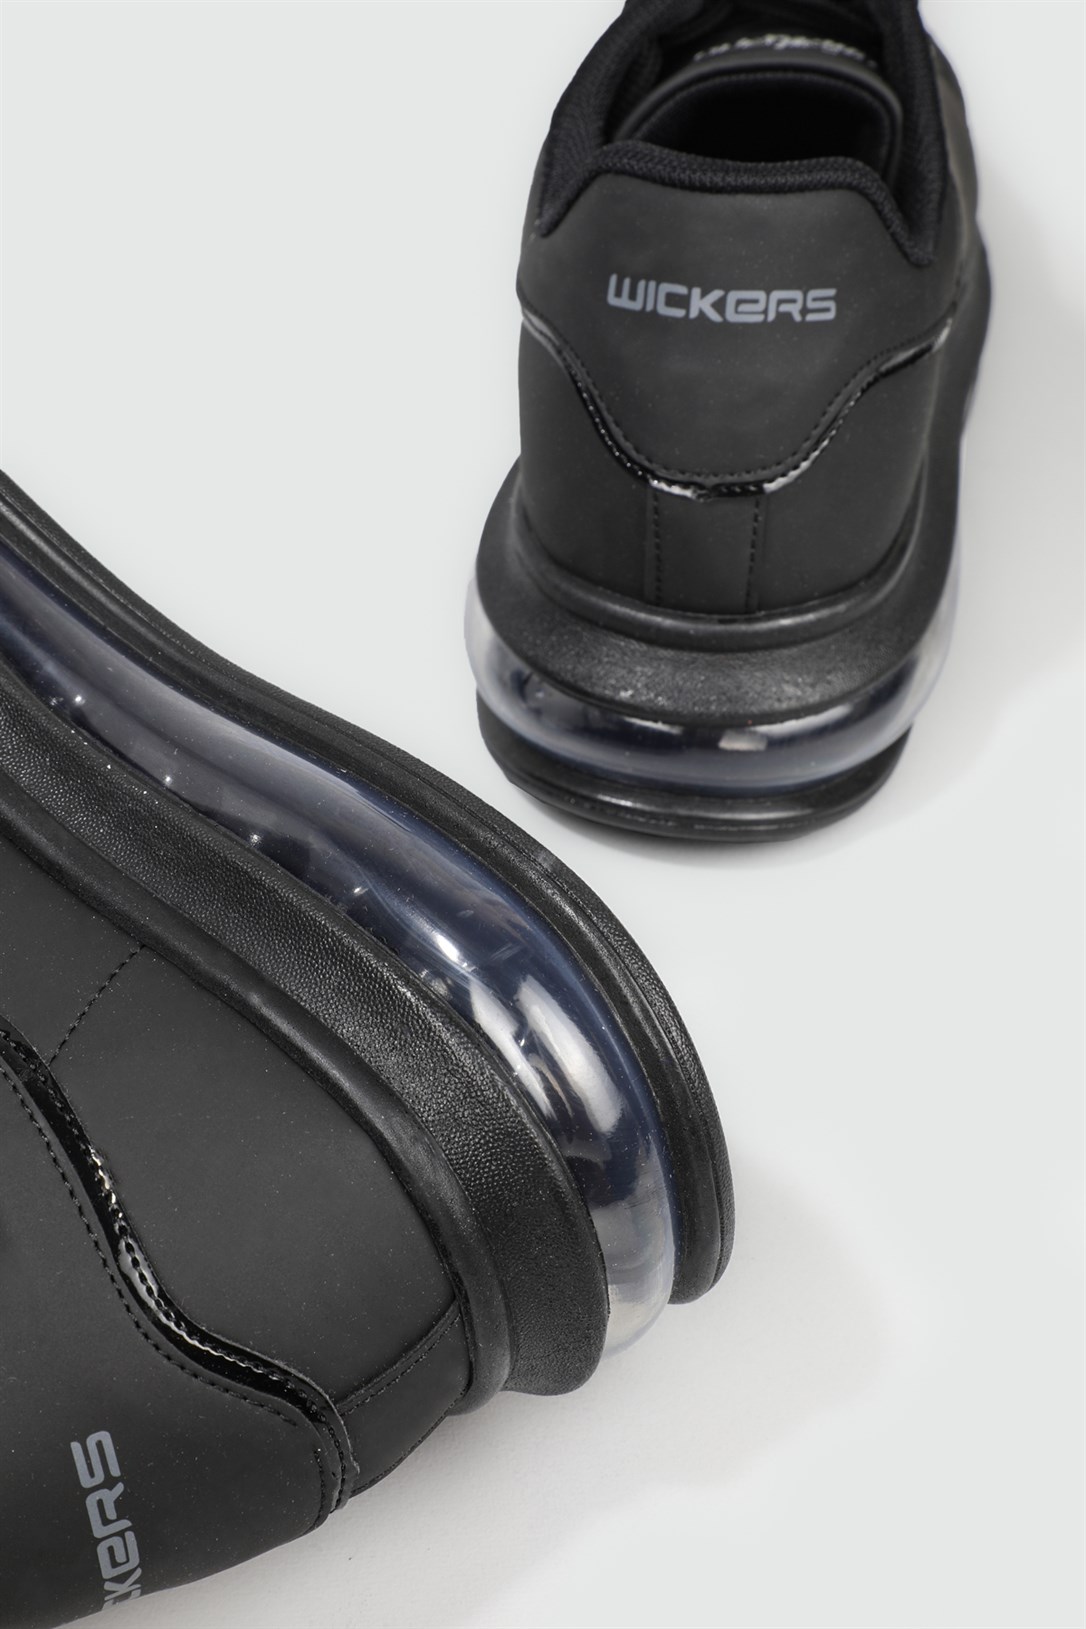 Wickers Air Taban Günlük Rahat Sneaker Siyah Füme Erkek Spor Ayakkabı 2488